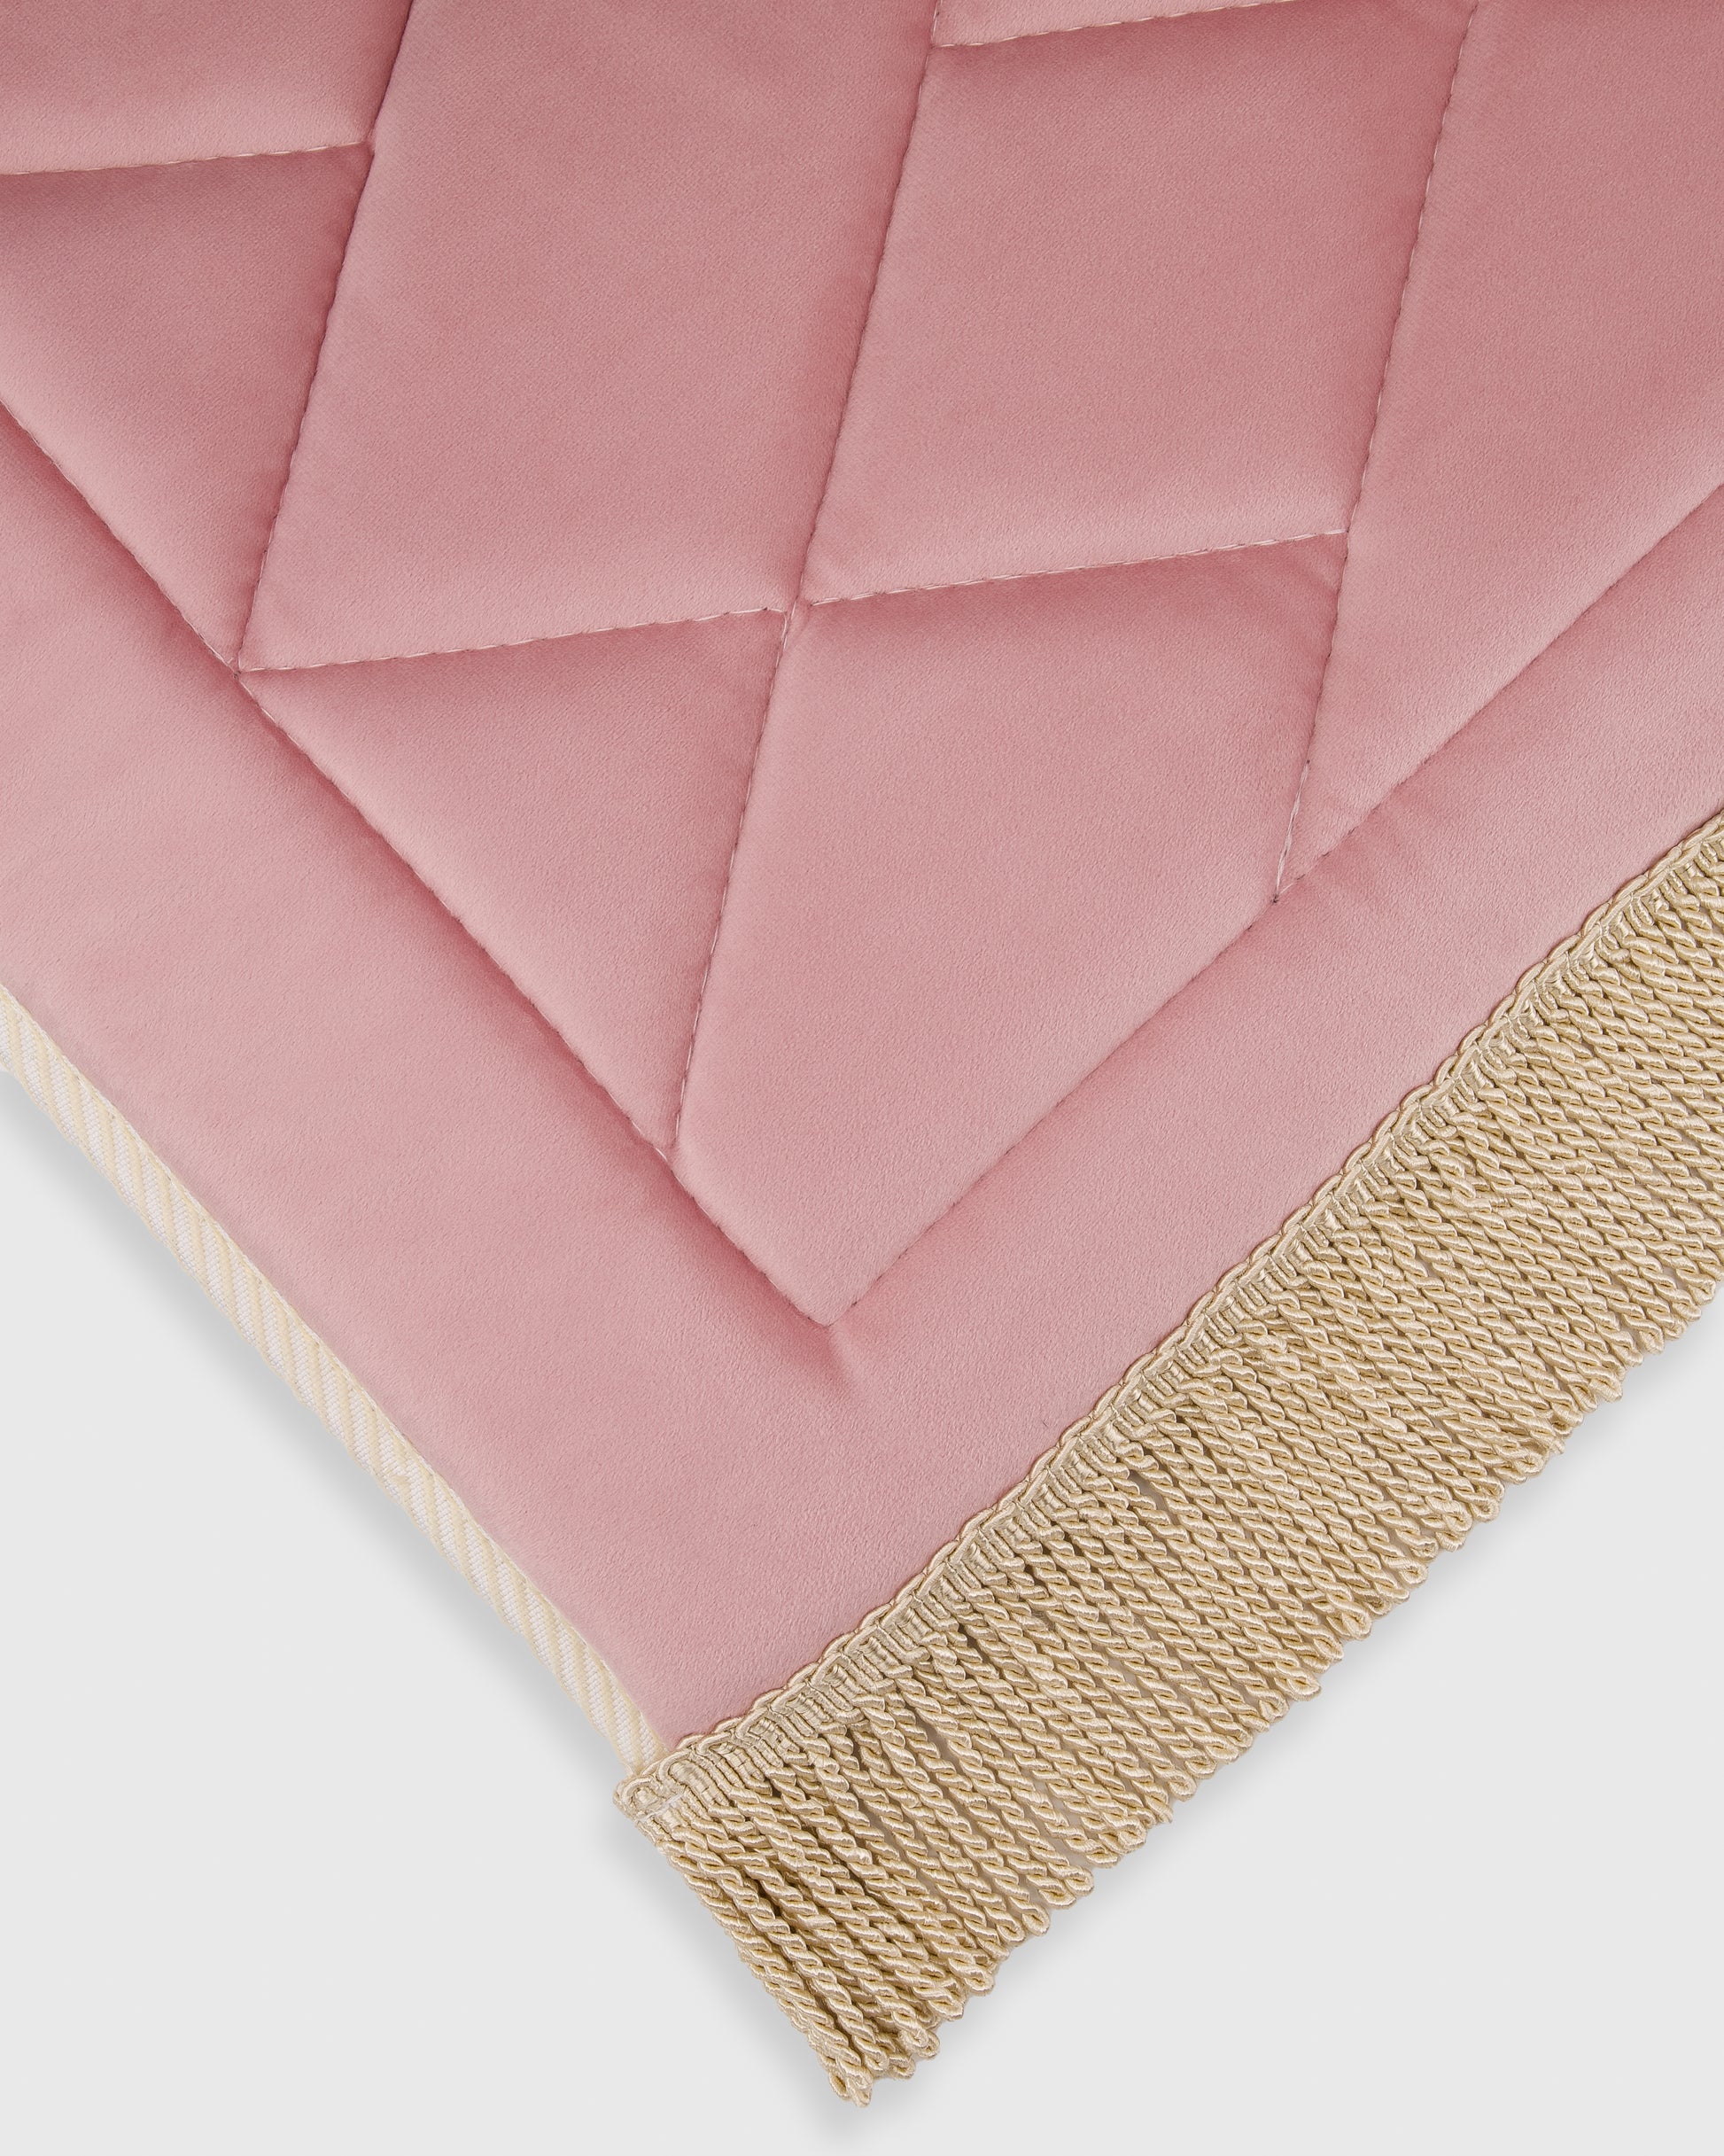 memory foam prayer mat thick soft supportive Rose Pink close up 